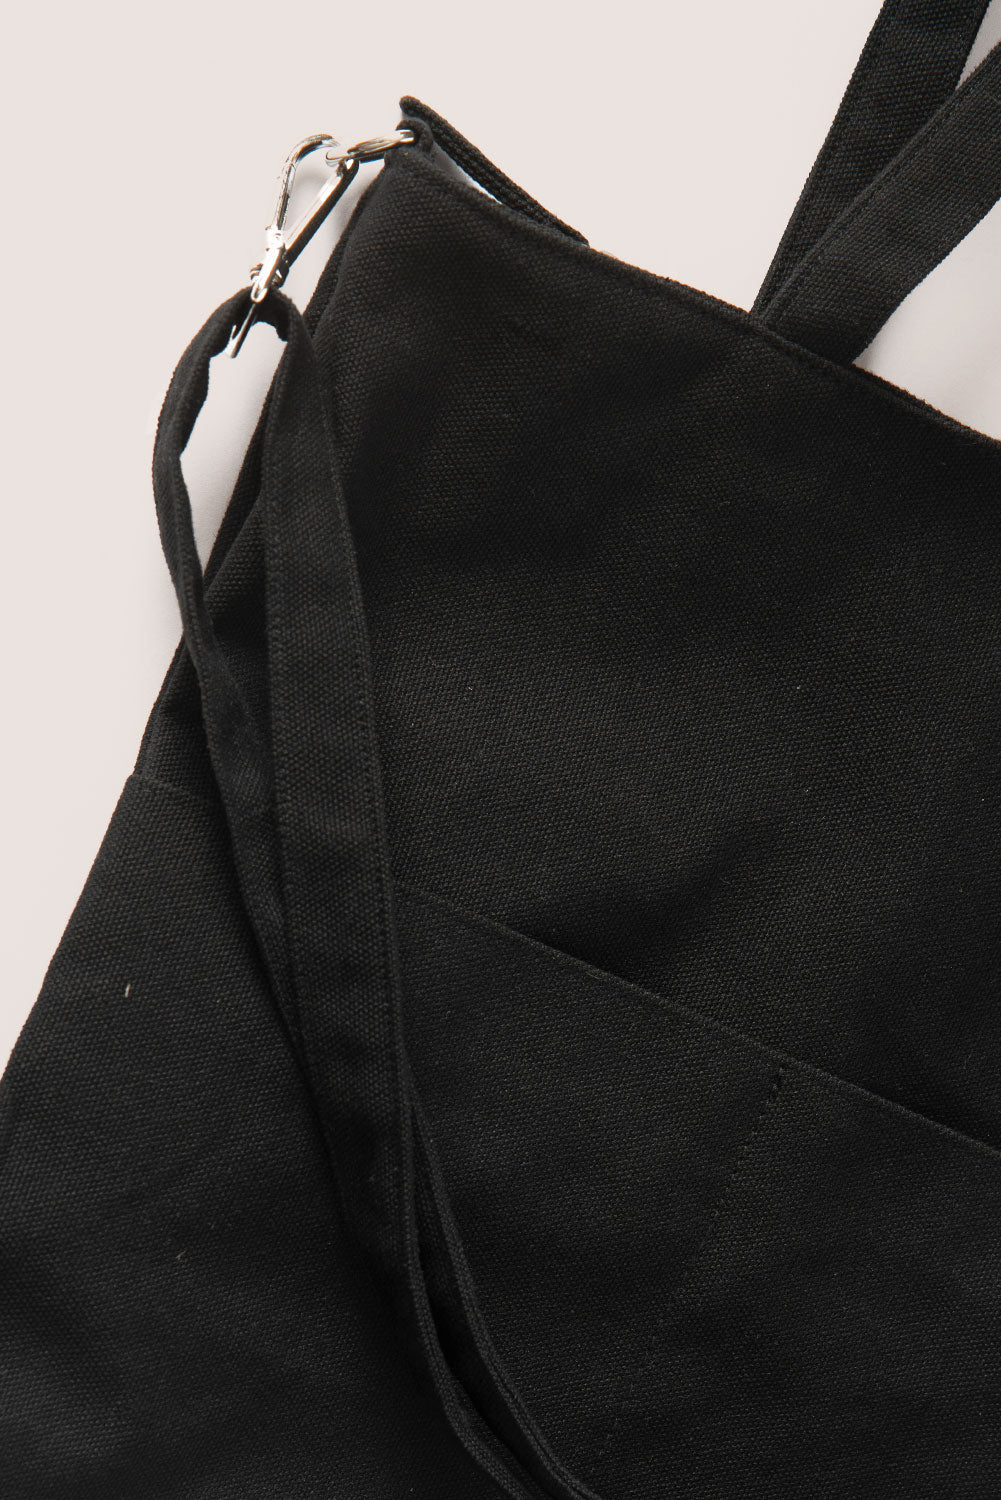 Black Daily Tote Bag (Version 3.0)